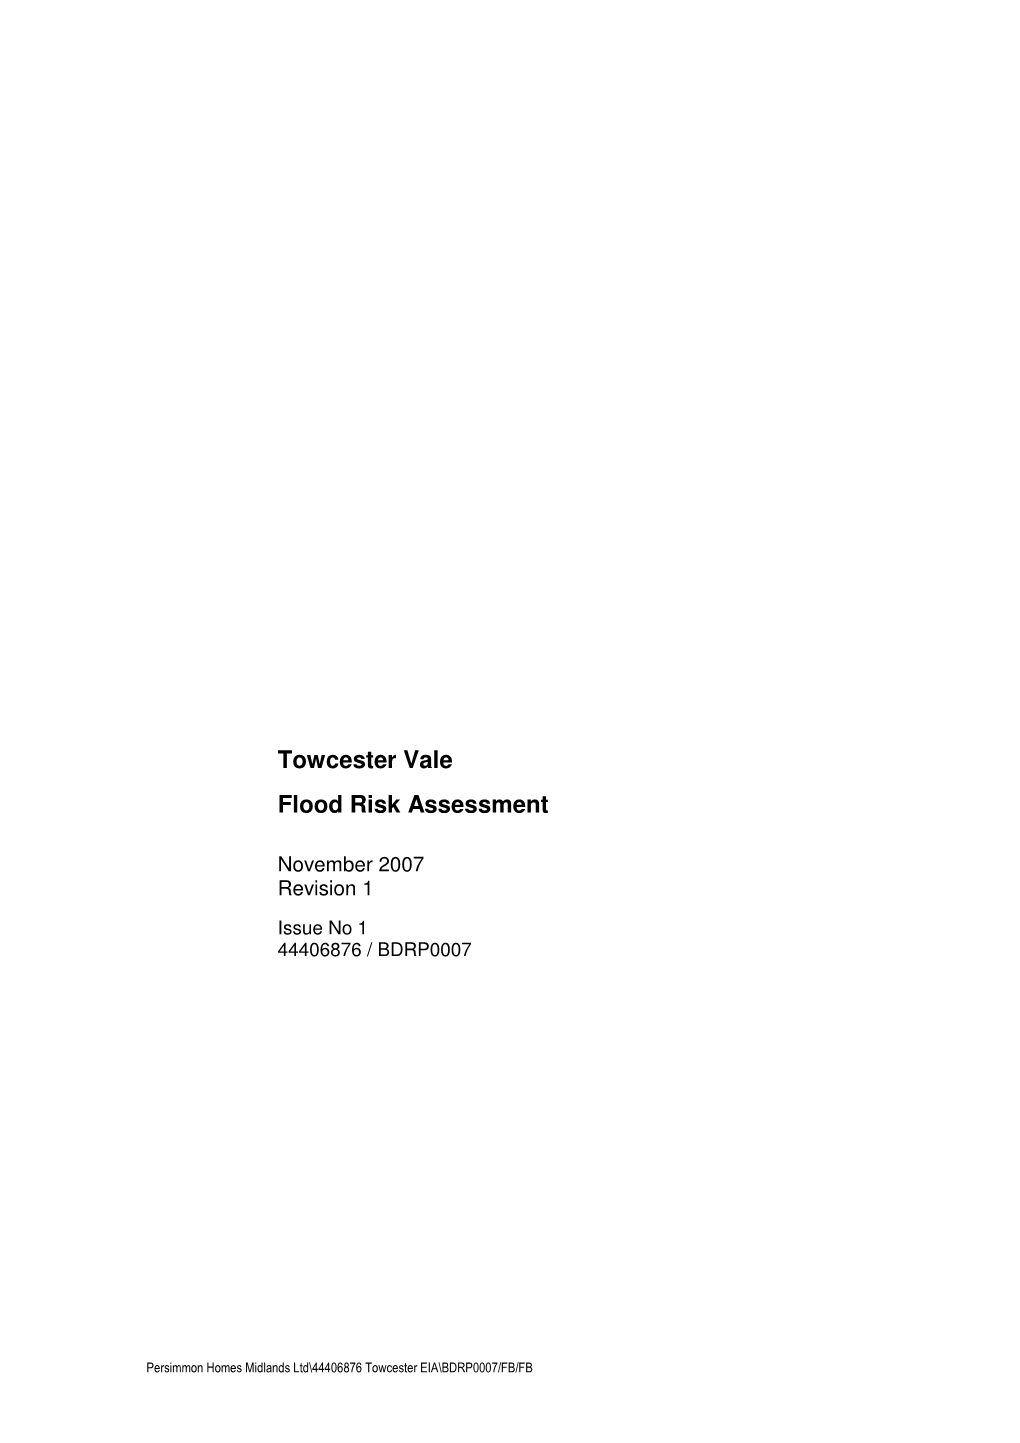 Towcester Vale Flood Risk Assessment